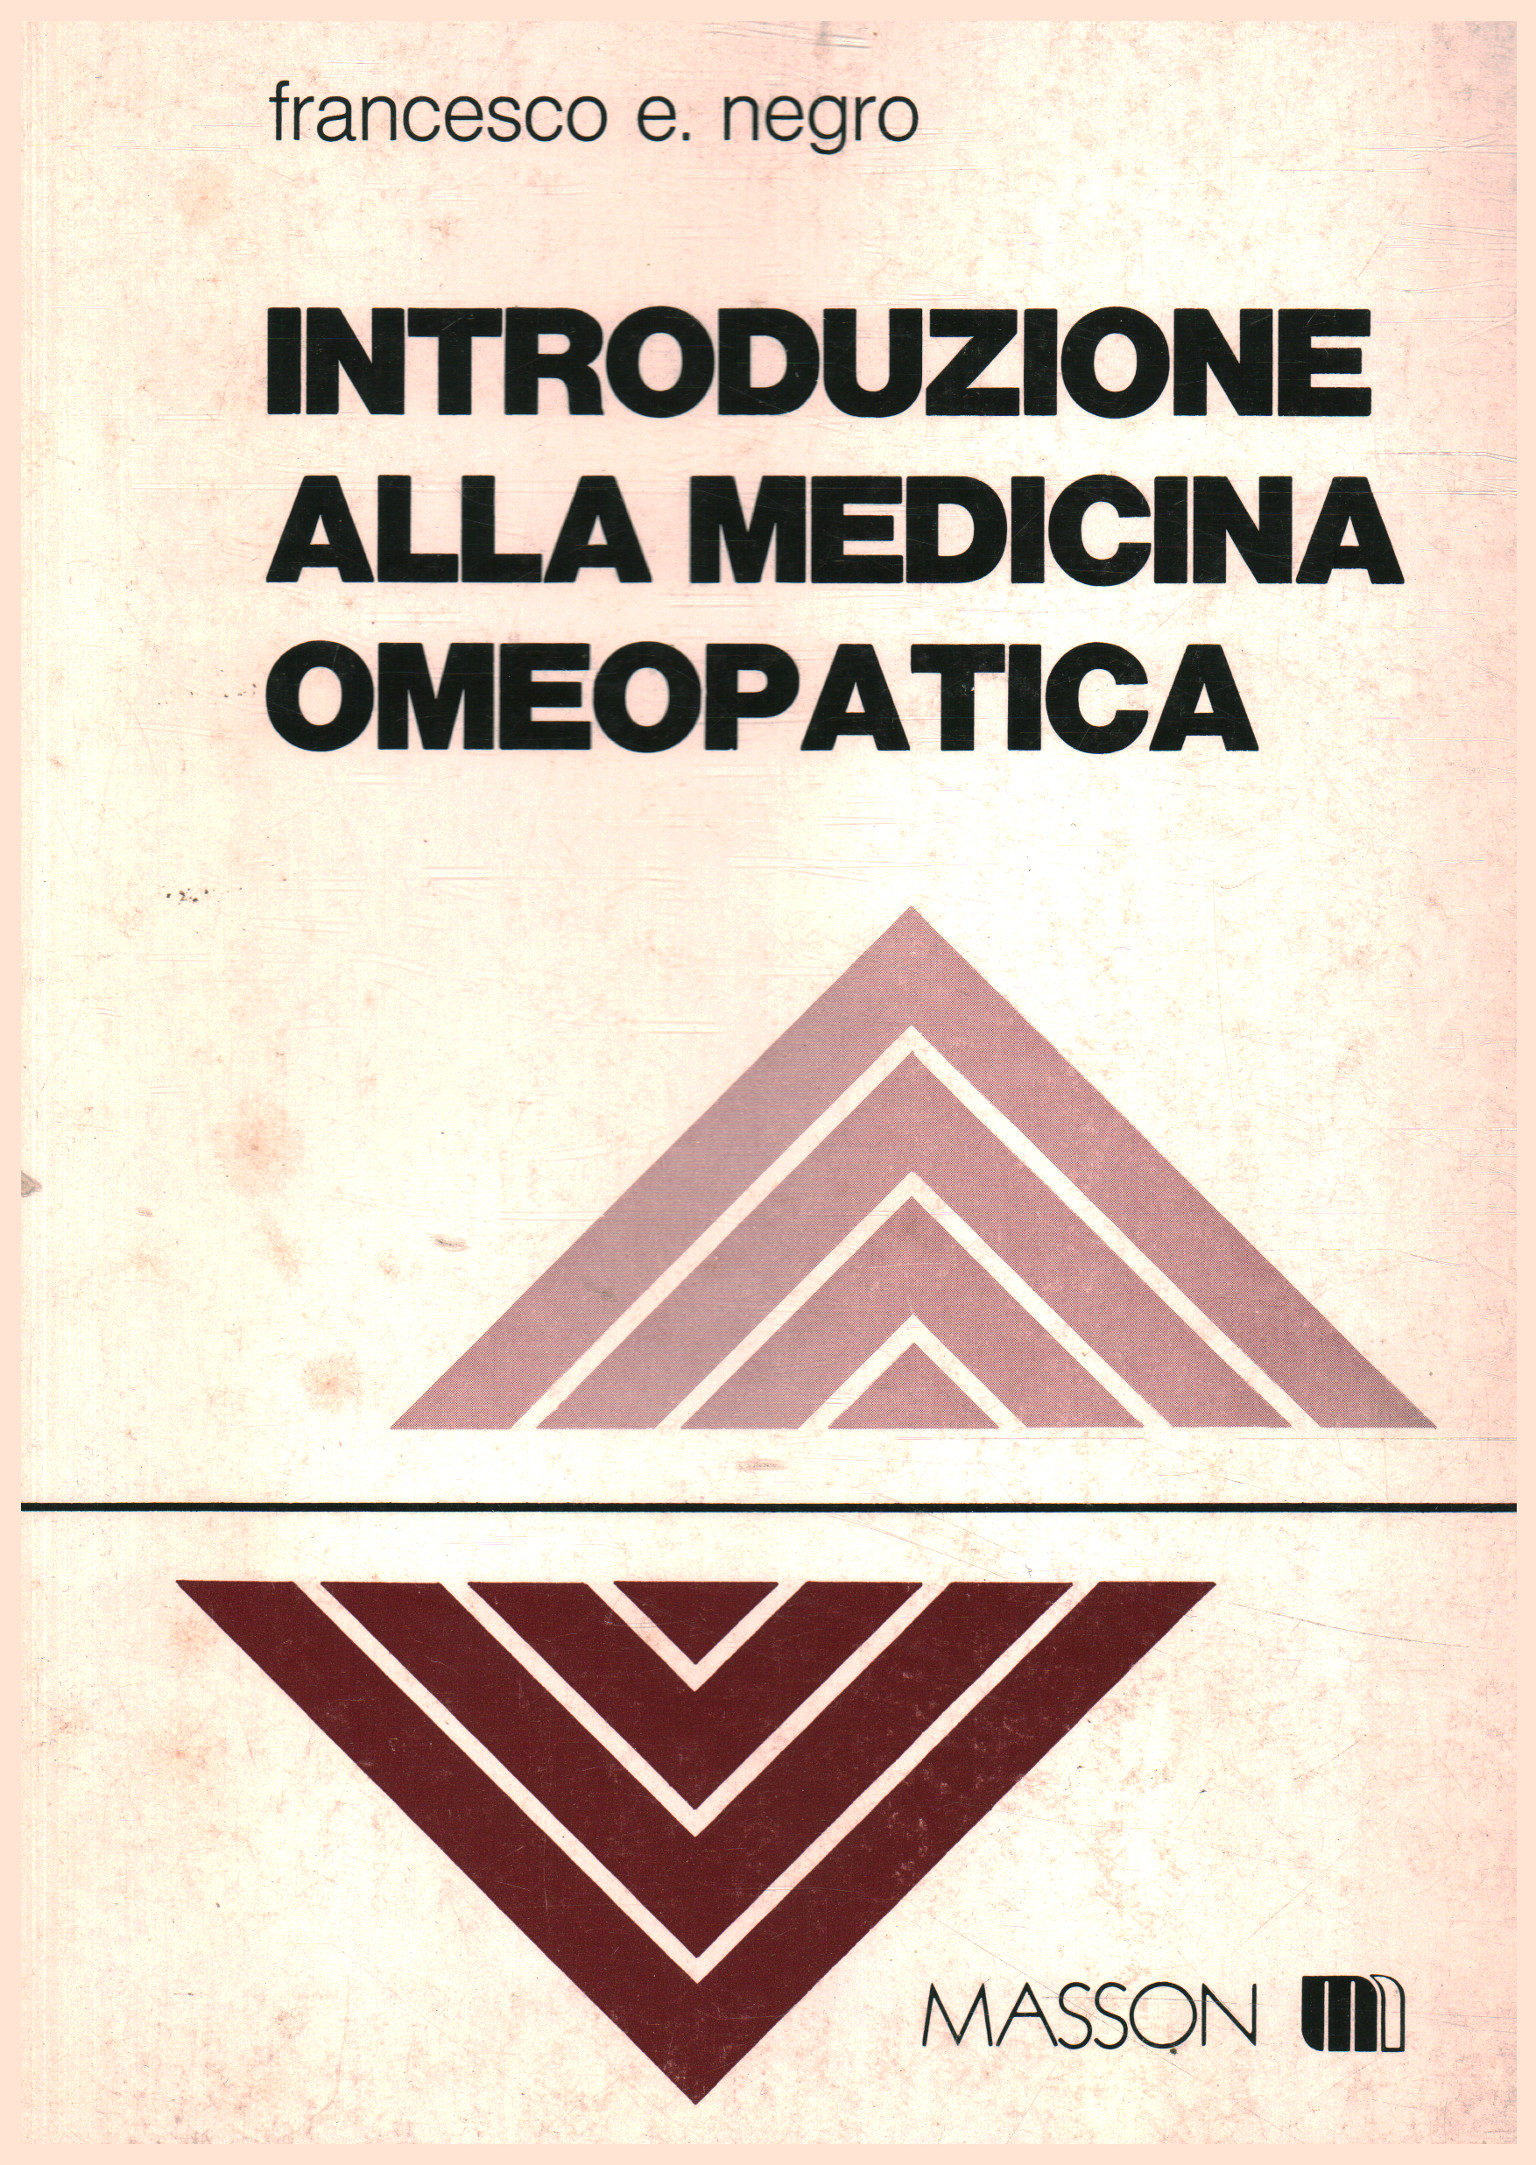 Introduction to homeopathic medicine, Francesco E. Negro